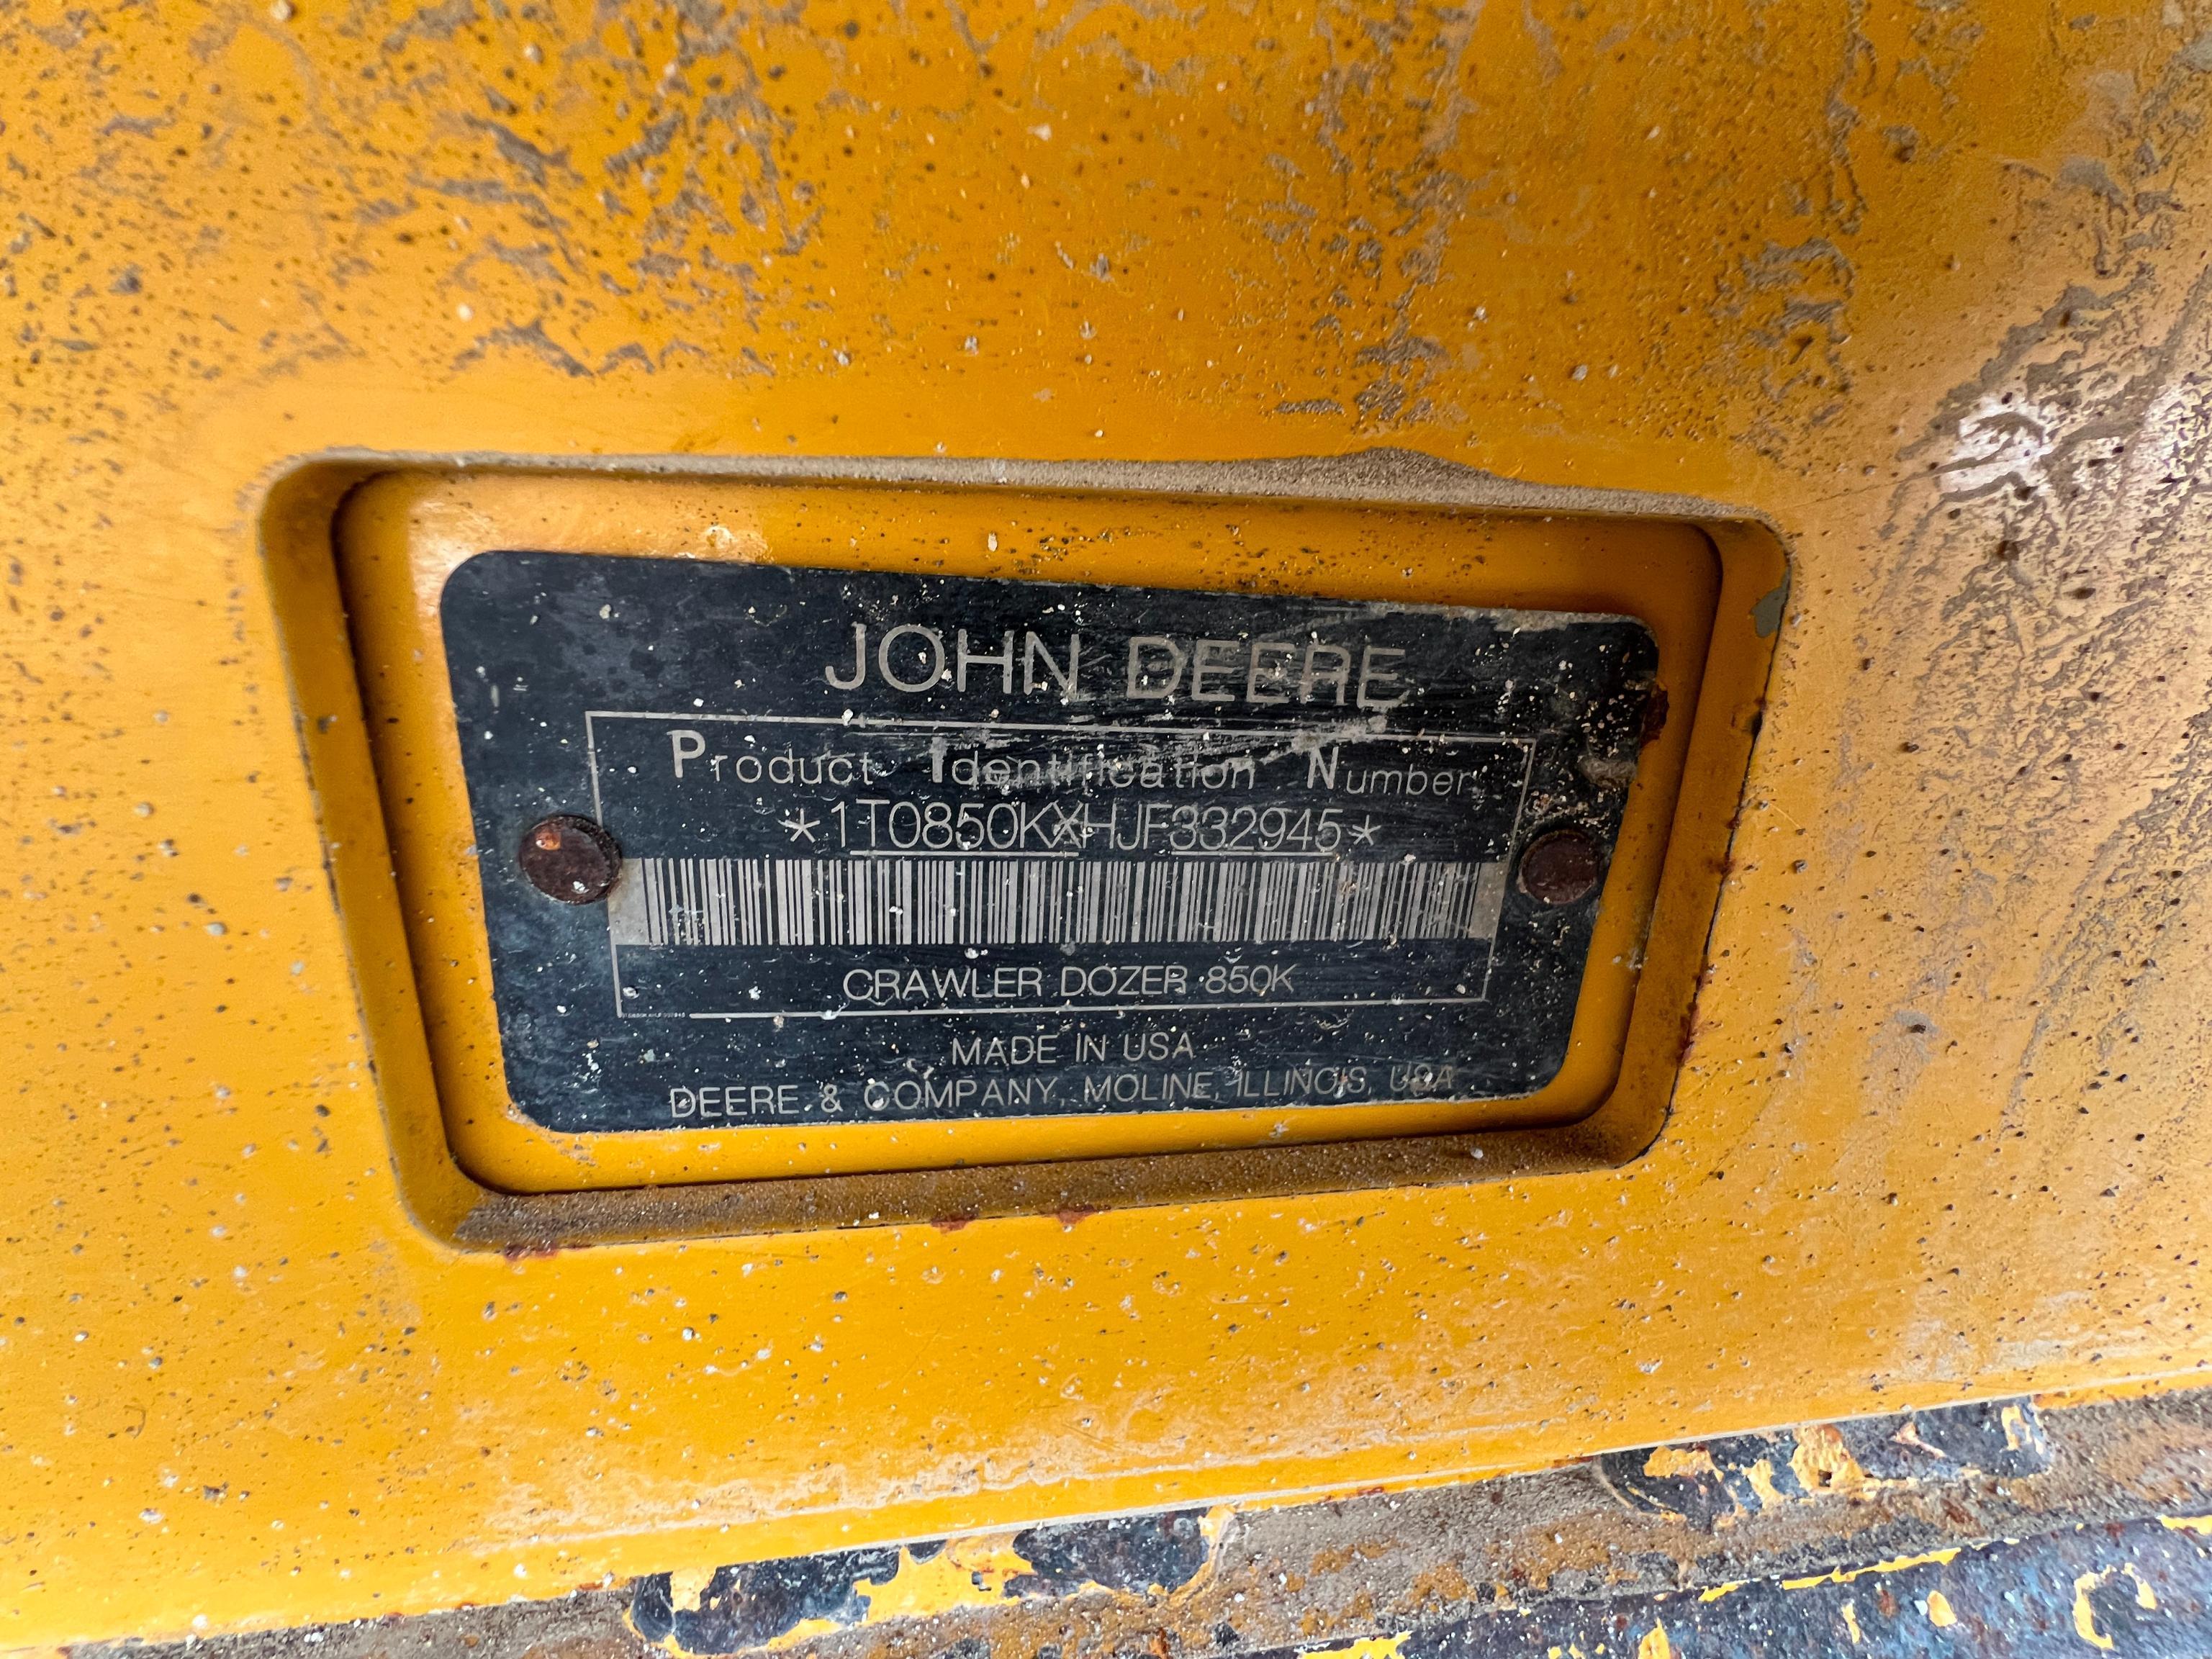 2018 JOHN DEERE 850K WLT CRAWLER TRACTOR SN:1T0850KXHJF332945 powered by John Deere diesel engine,